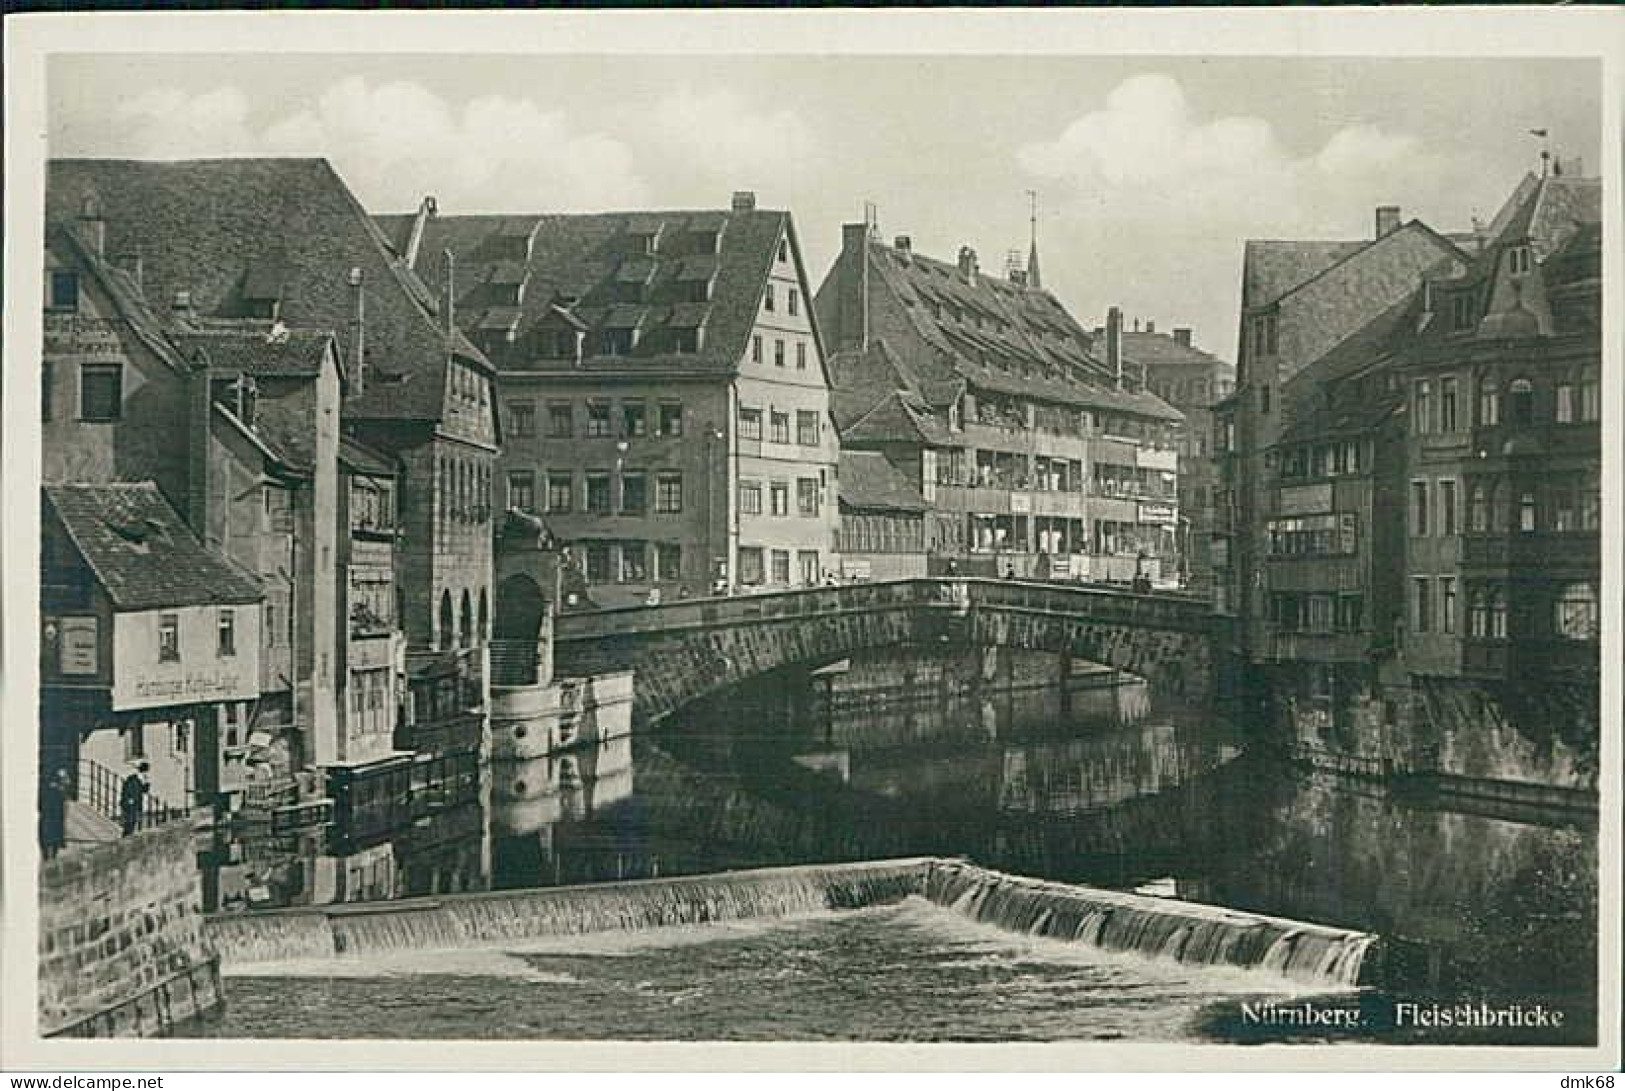 AK GERMANY - NURNBERG - FLESCHBRUCKE - VERLAG A. ZEMSCH - RPPC POSTCARD 1930s/40s  (18342) - Nürnberg